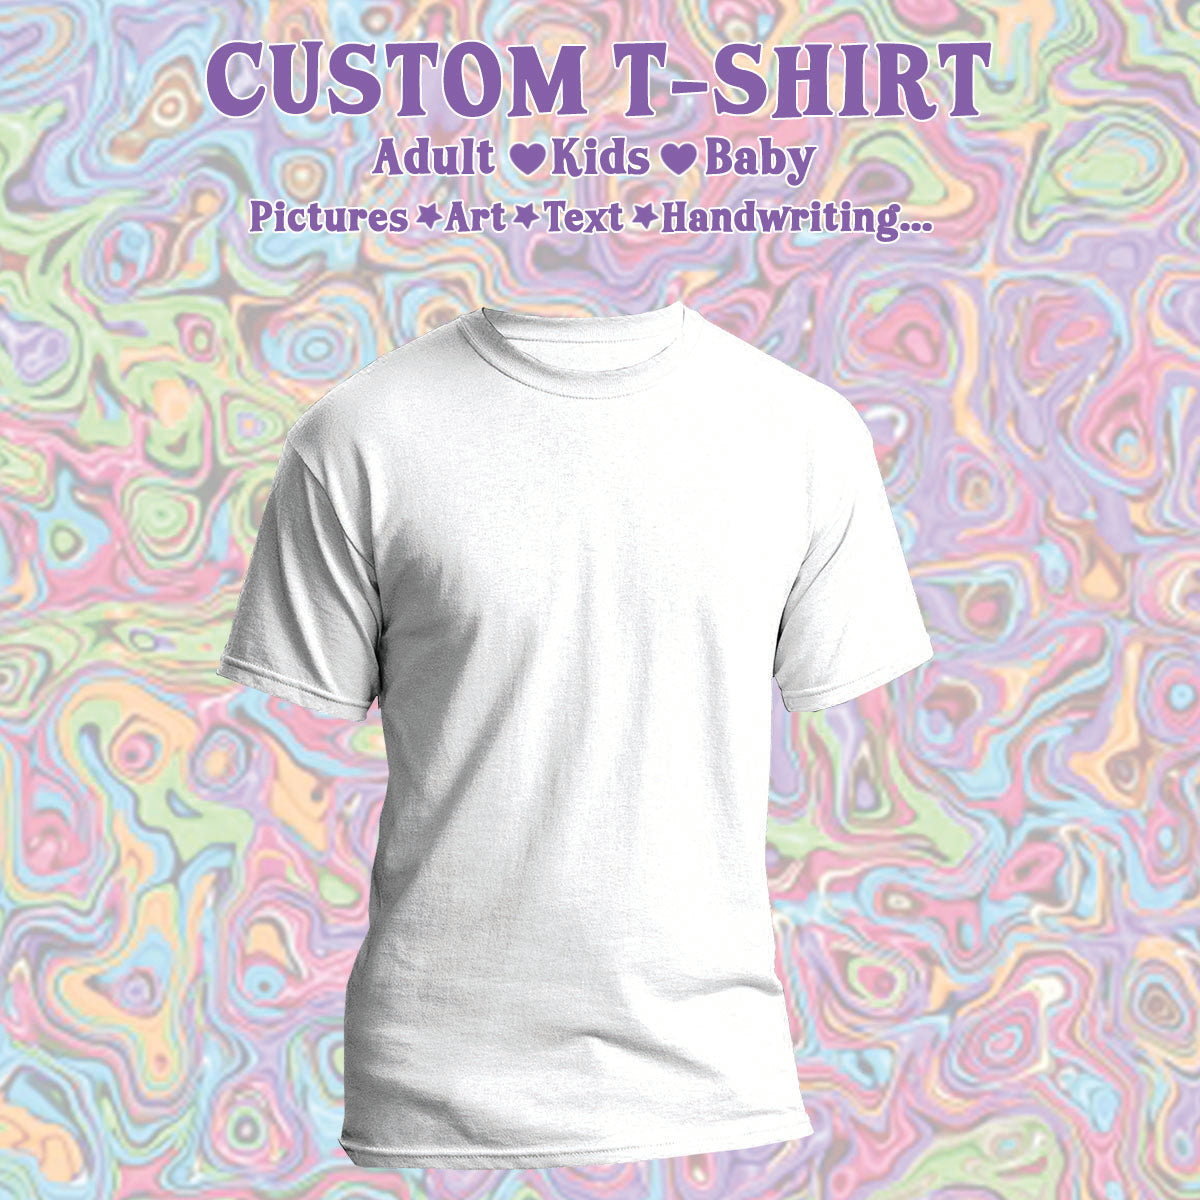 custom shirt, custom tshirt, custom t-shirt, custom tee shirt, sublimation shirt, photo shirt